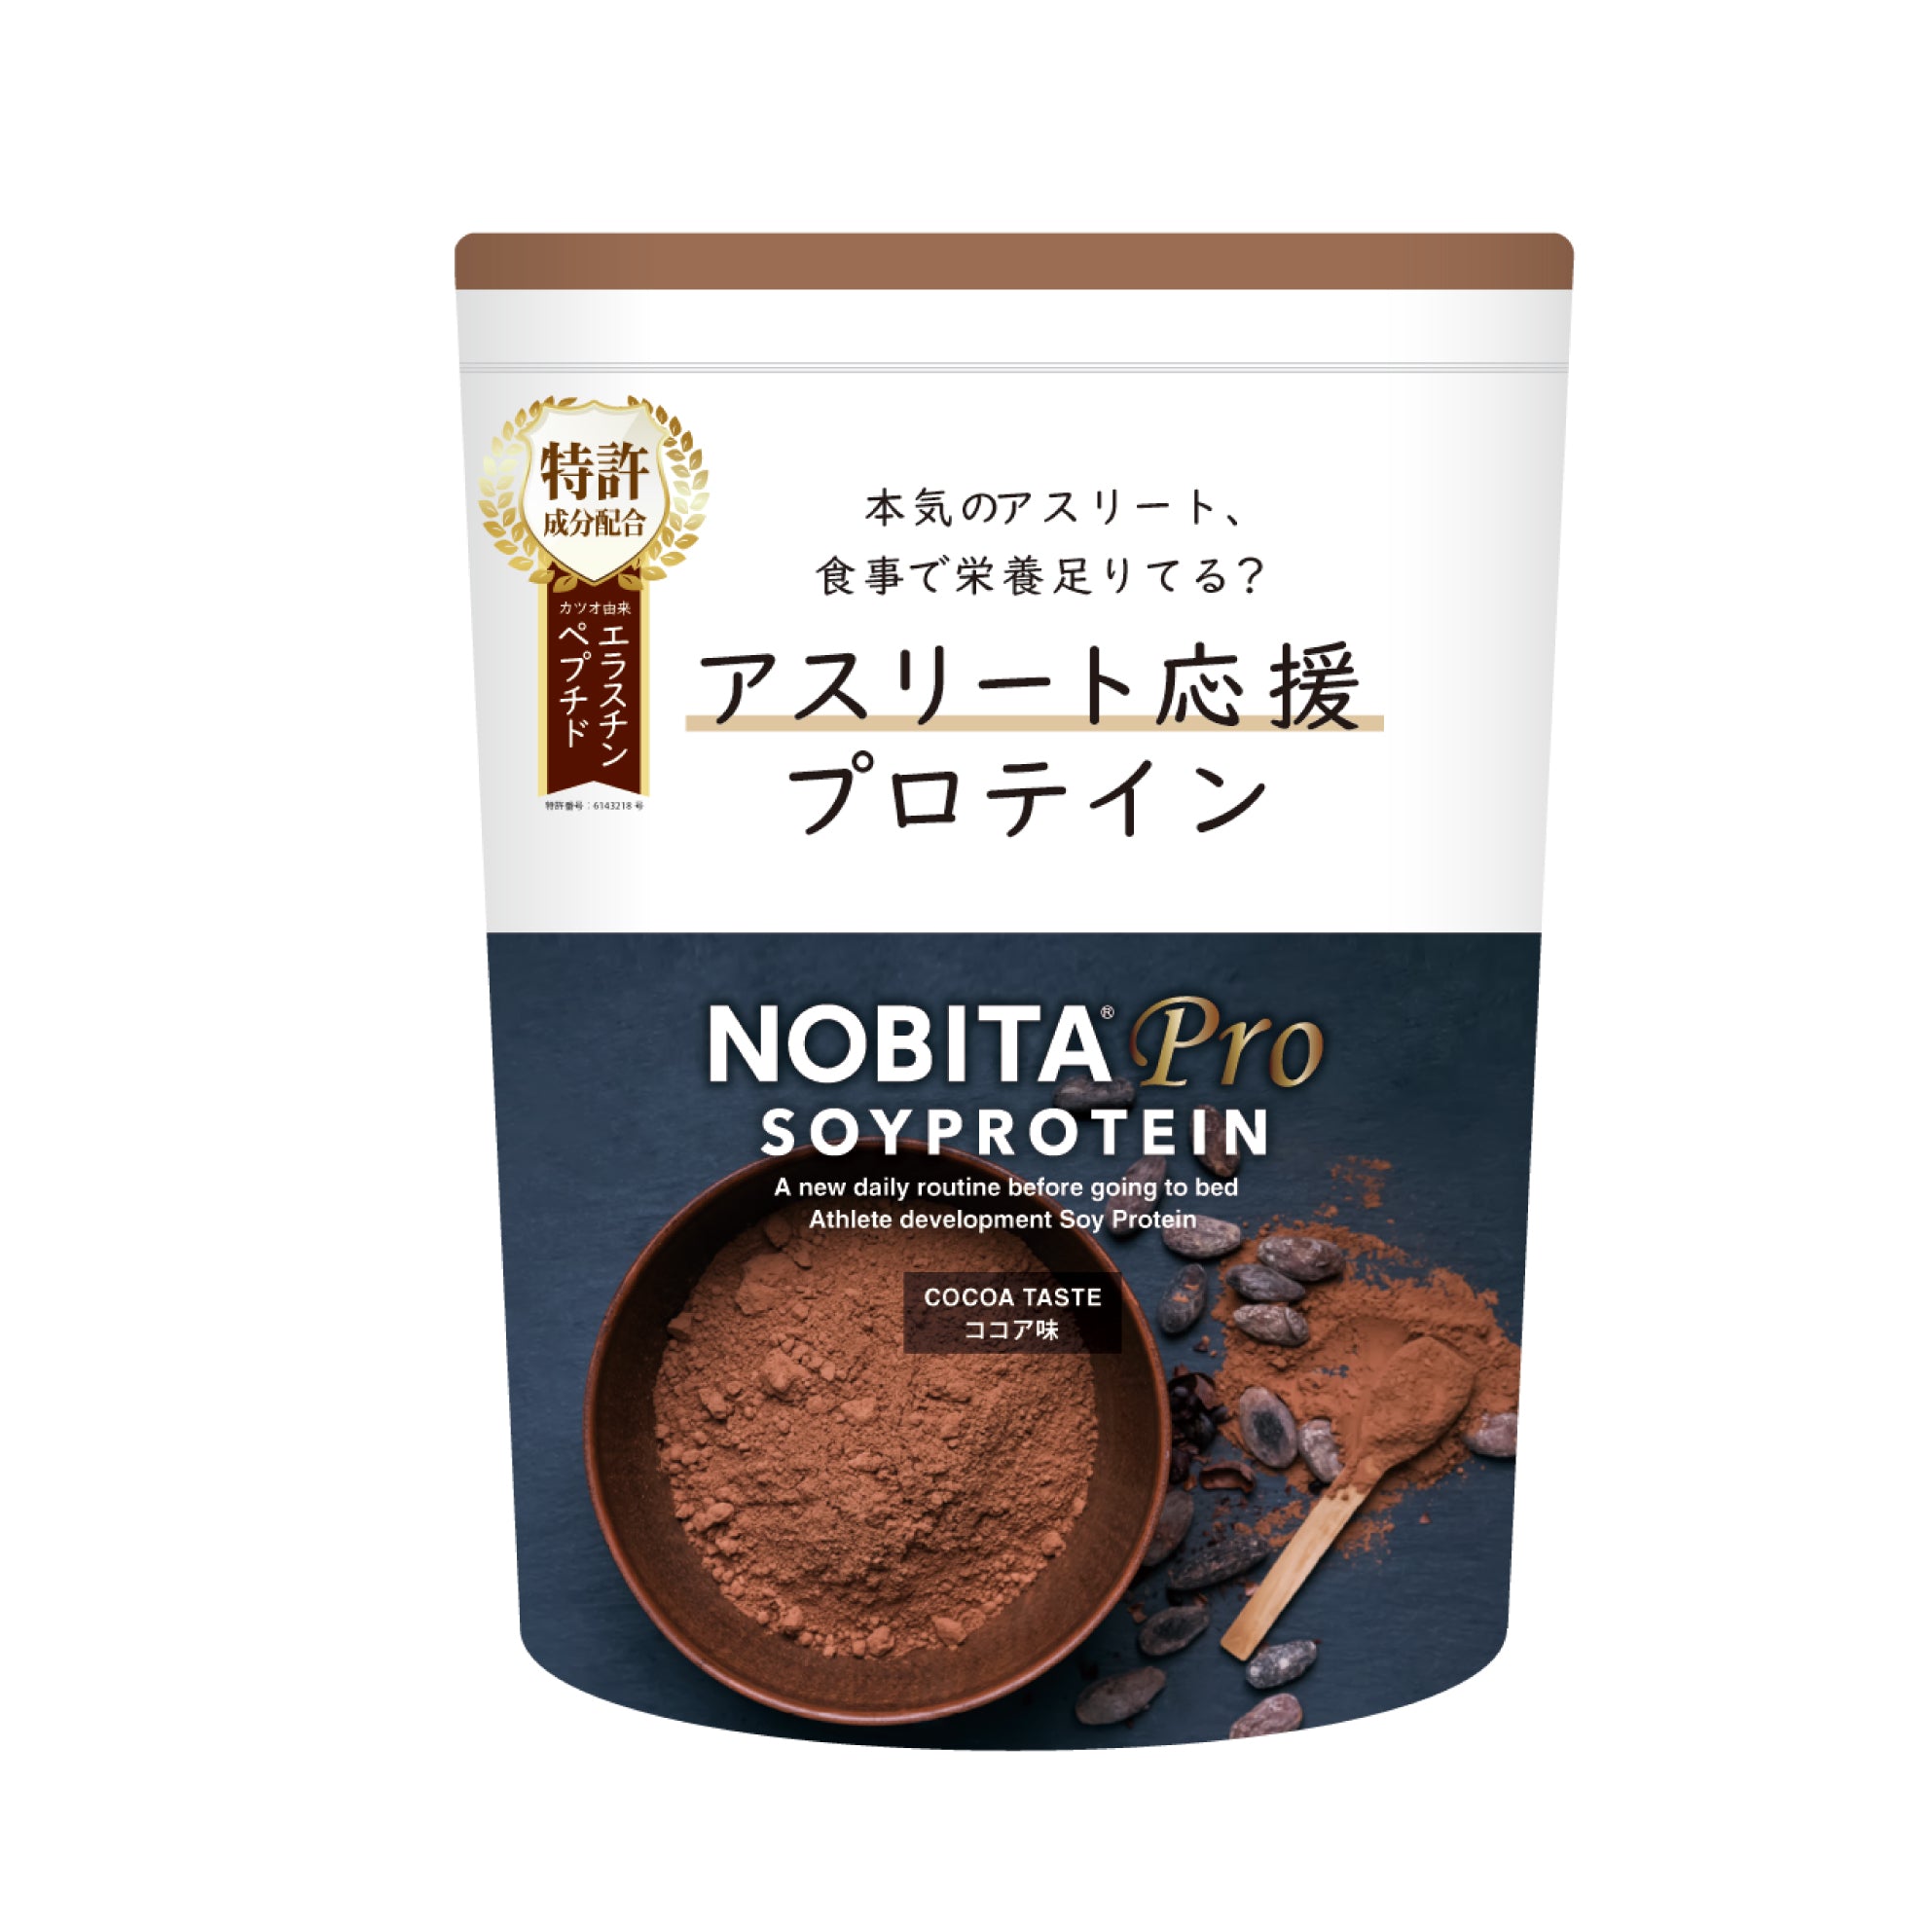 NOBITA-Proソイプロテイン - ココア味 750g – NOBITA-SoyProtein